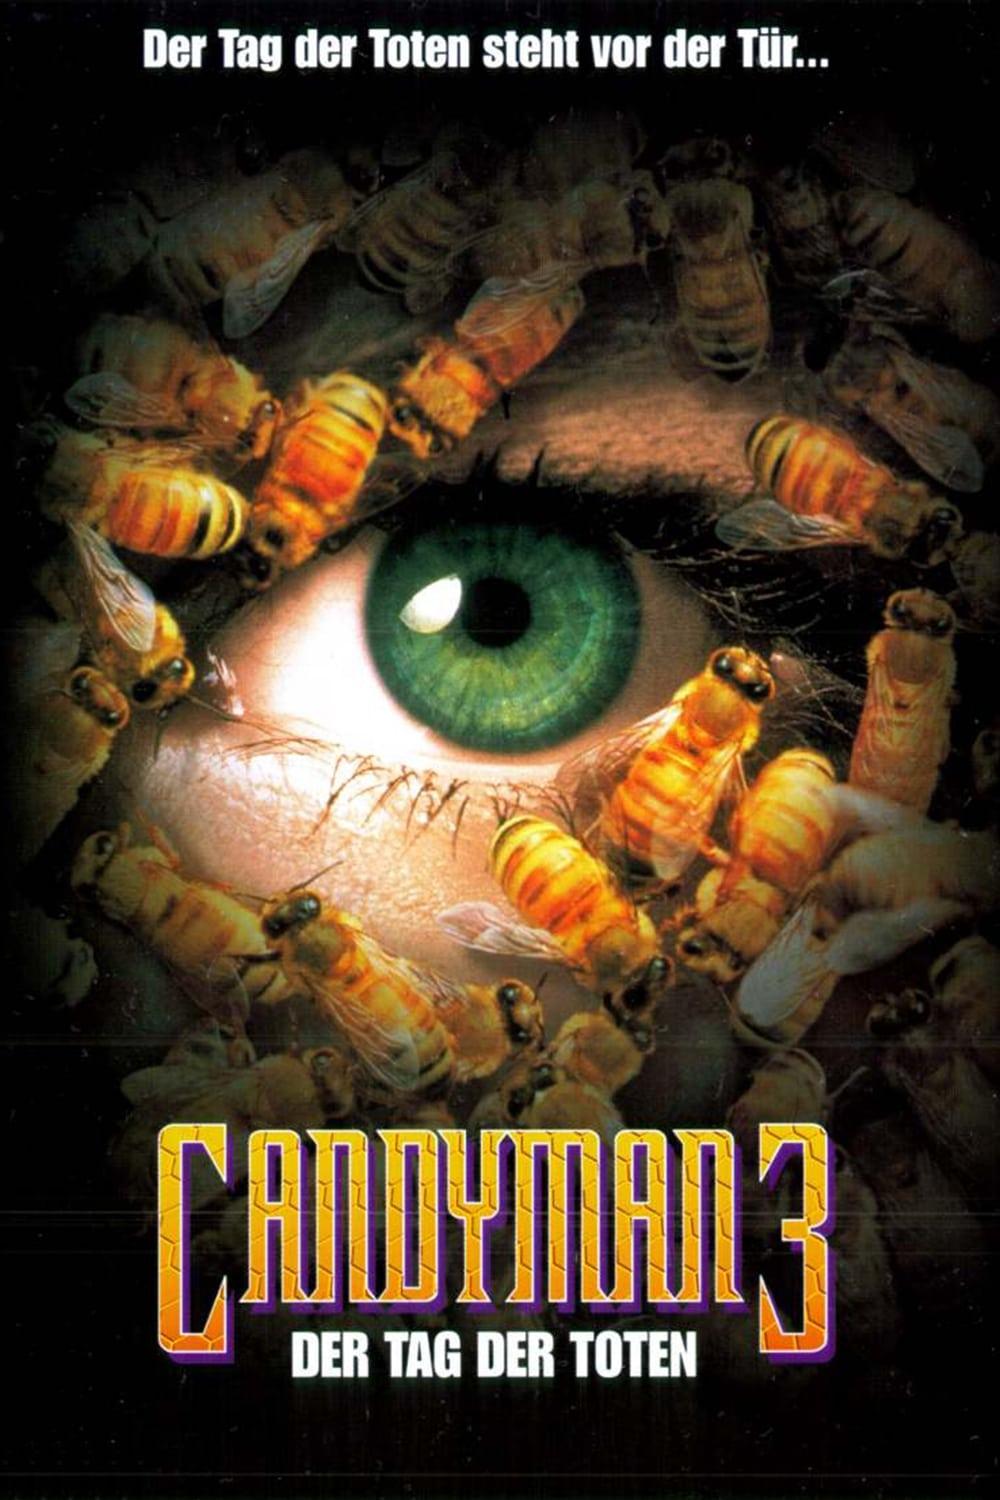 Candyman 3 - Der Tag der Toten poster